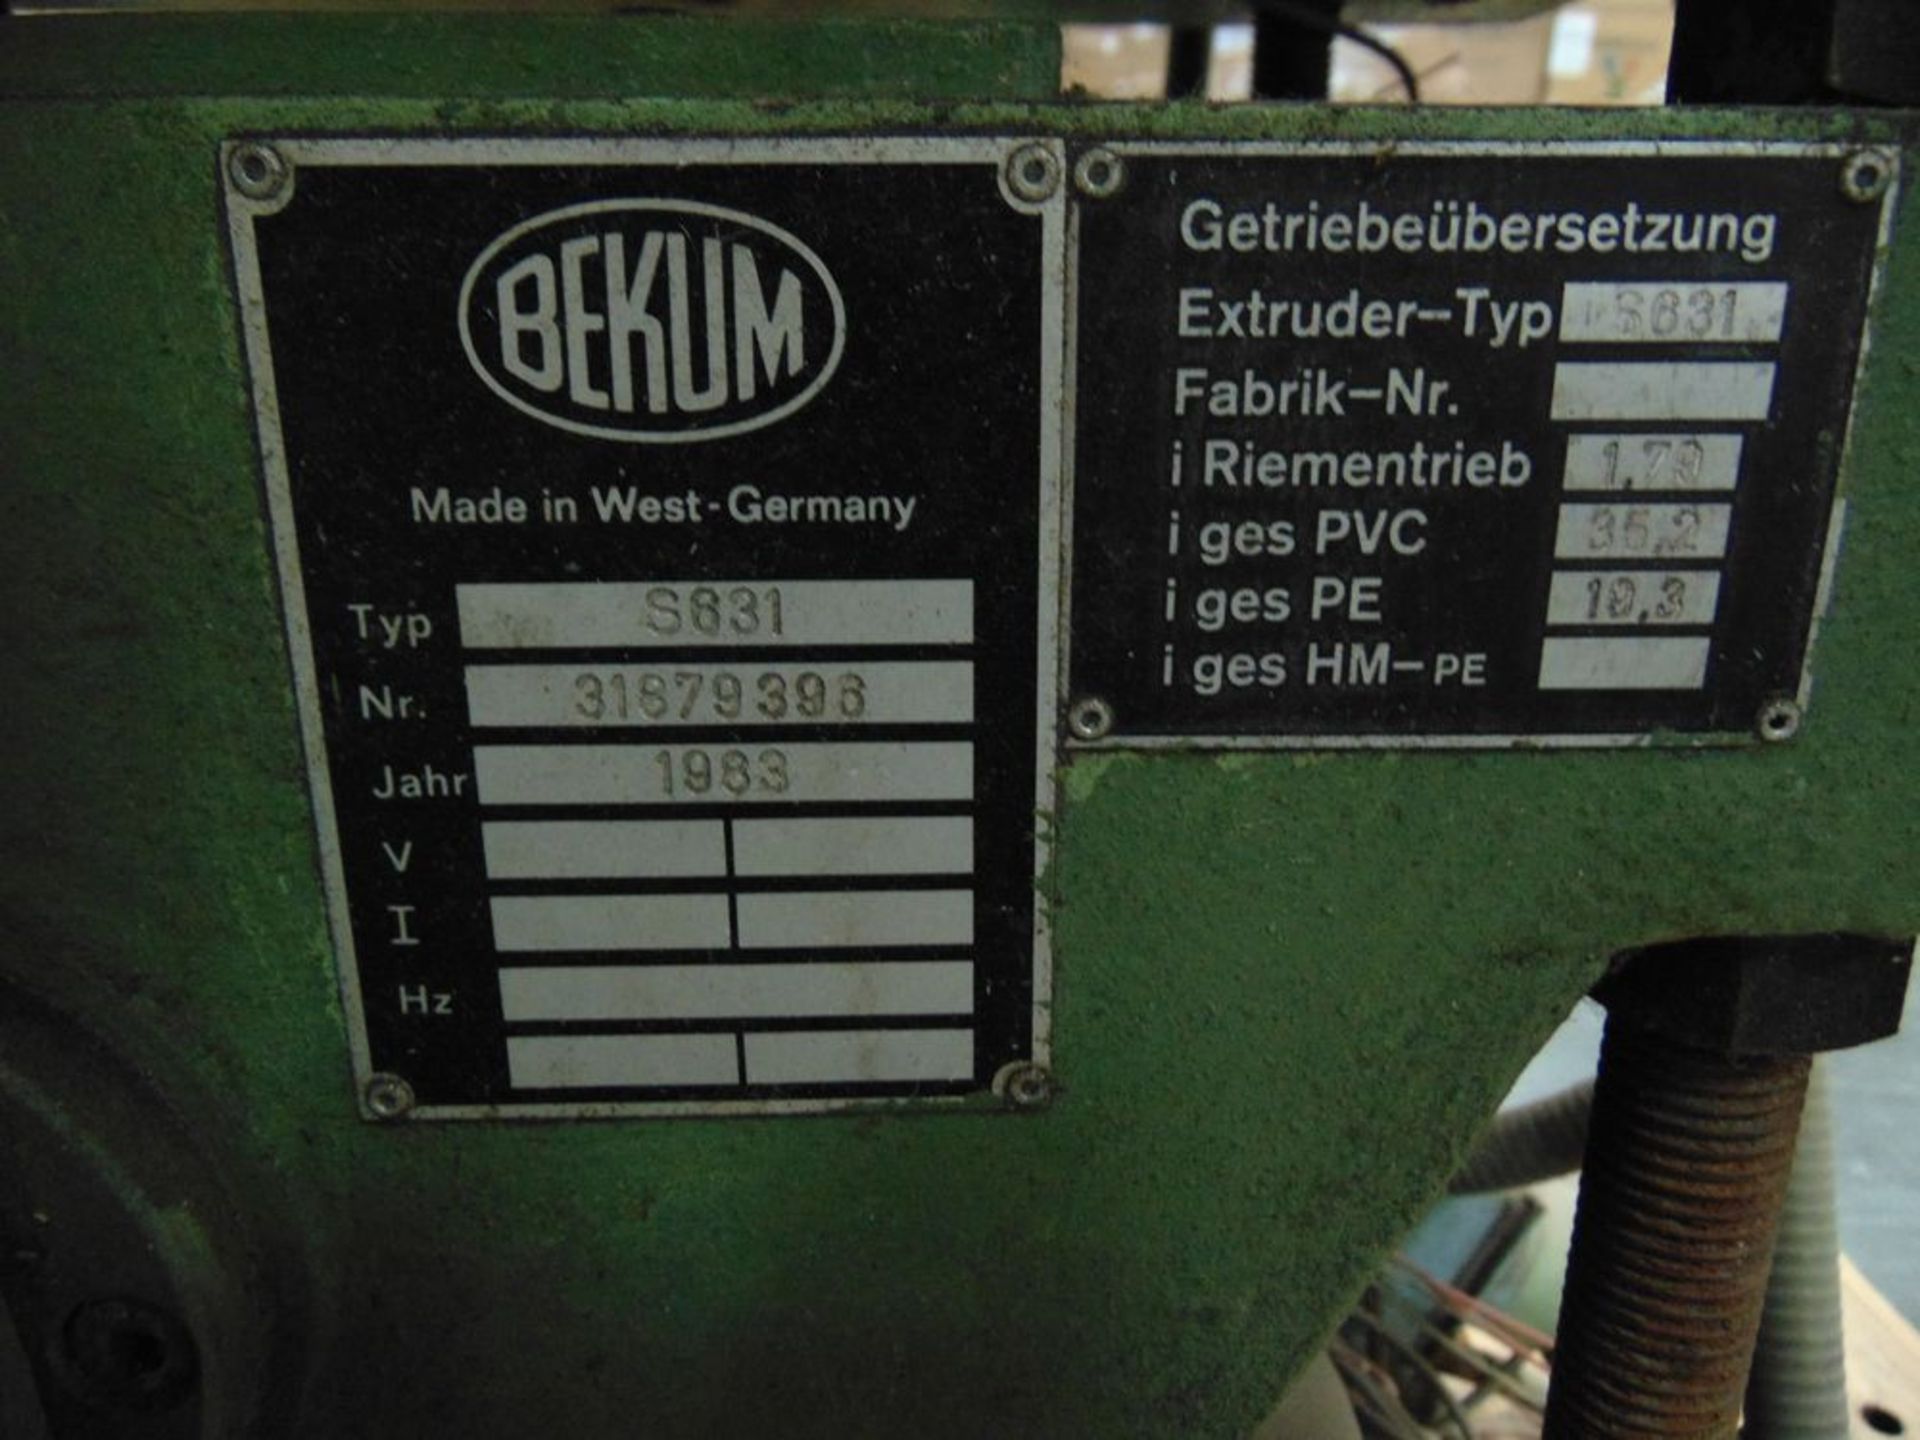 Bekum 60mm Extruder Fits 80 Vintage 100 Type S831 - Image 3 of 3